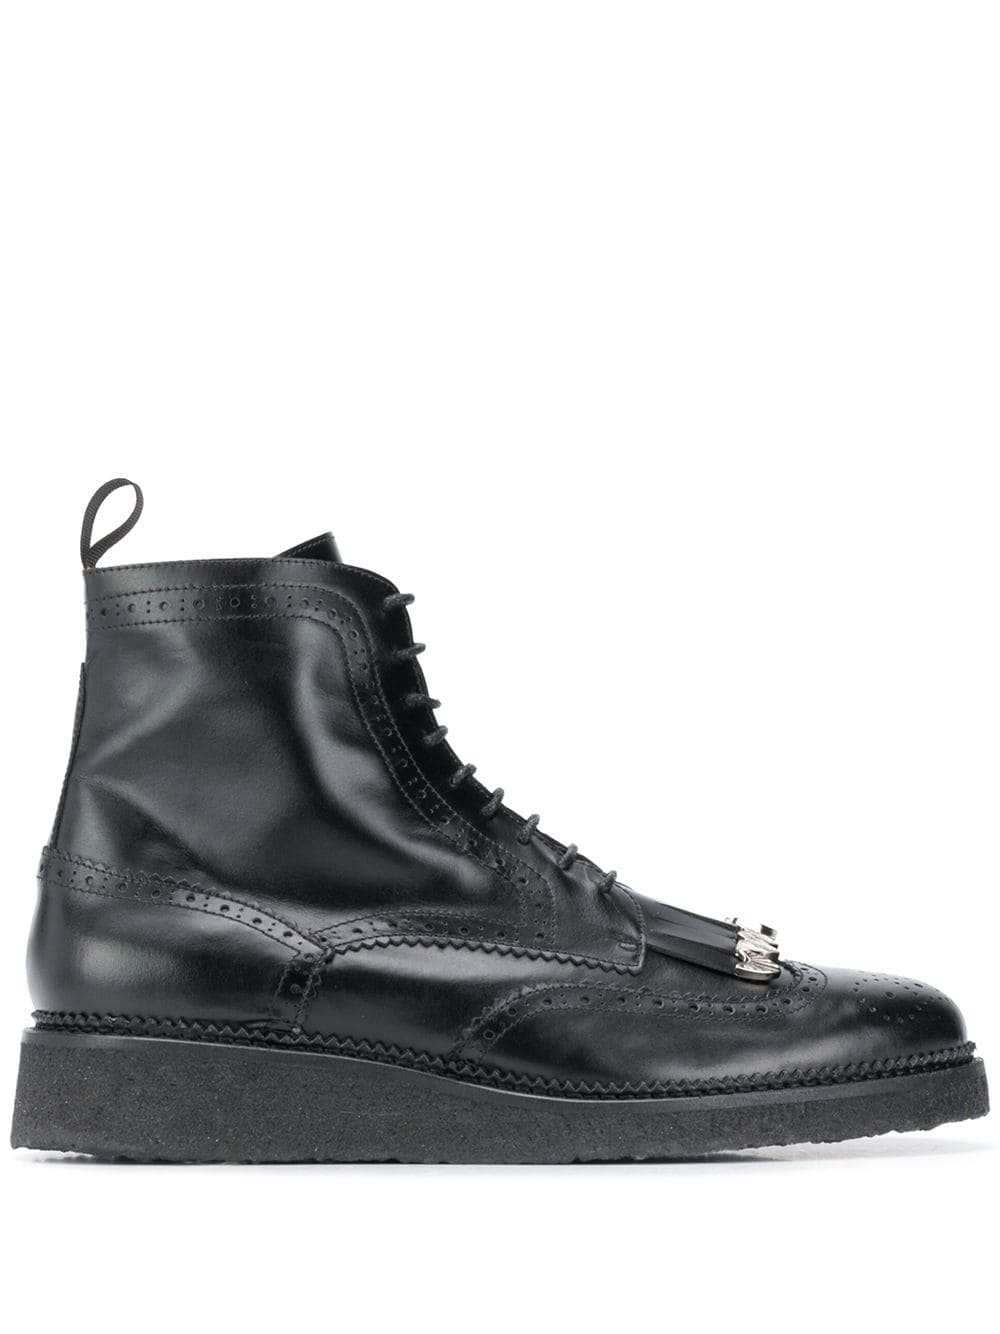 Toga Virilis Toga Virilis Stiefel Mit Budapestermuster Schwarz Togavirilis Shoes Boots Leather Brogues Black Boots